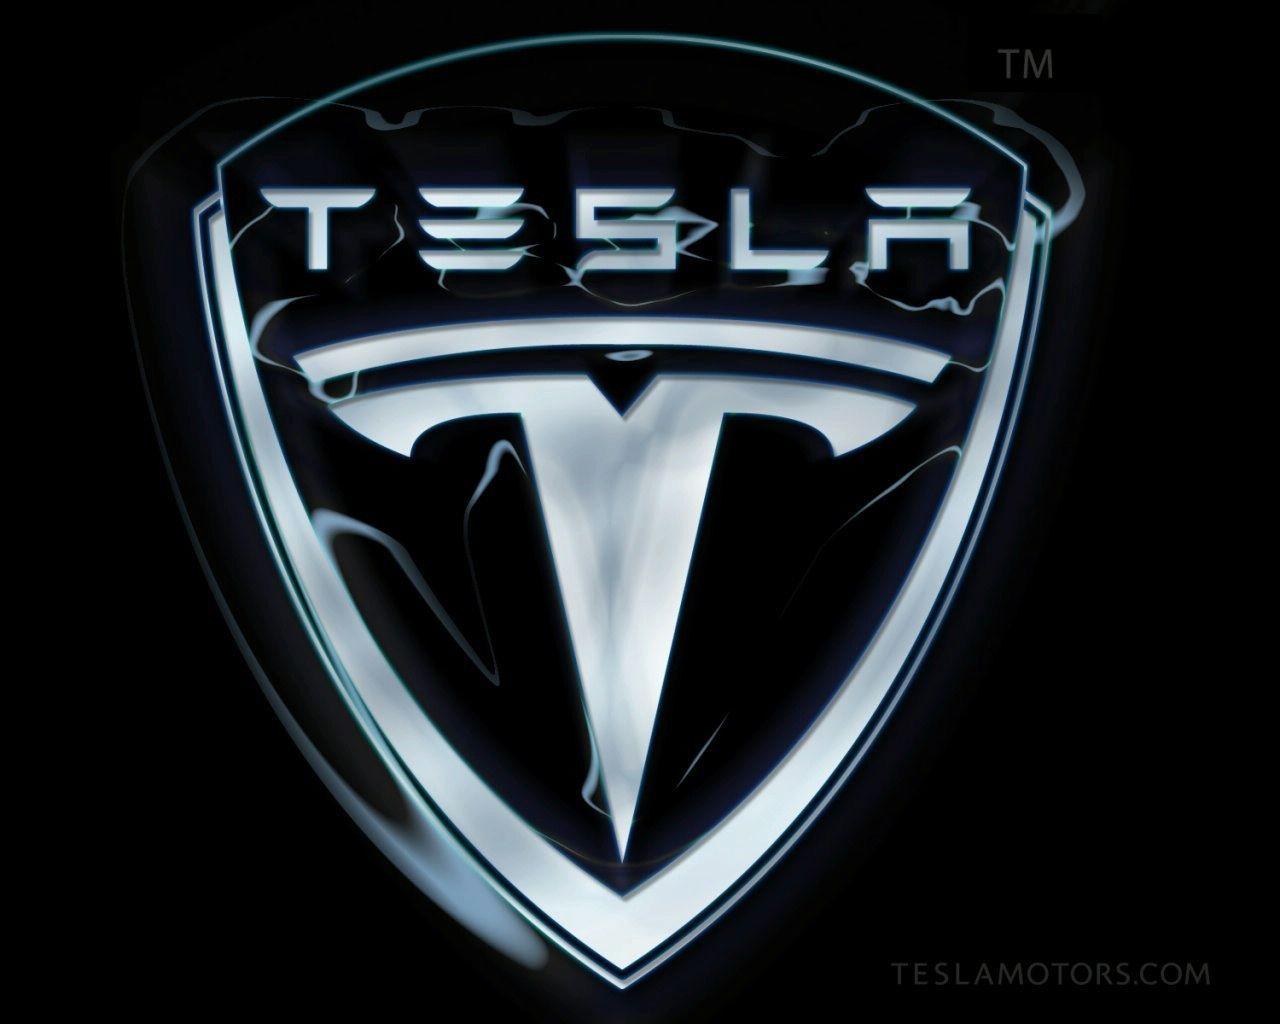 Tesla Motors Logo - Tesla Motors Logo | Automotive | Pinterest | Tesla motors, Cars and ...